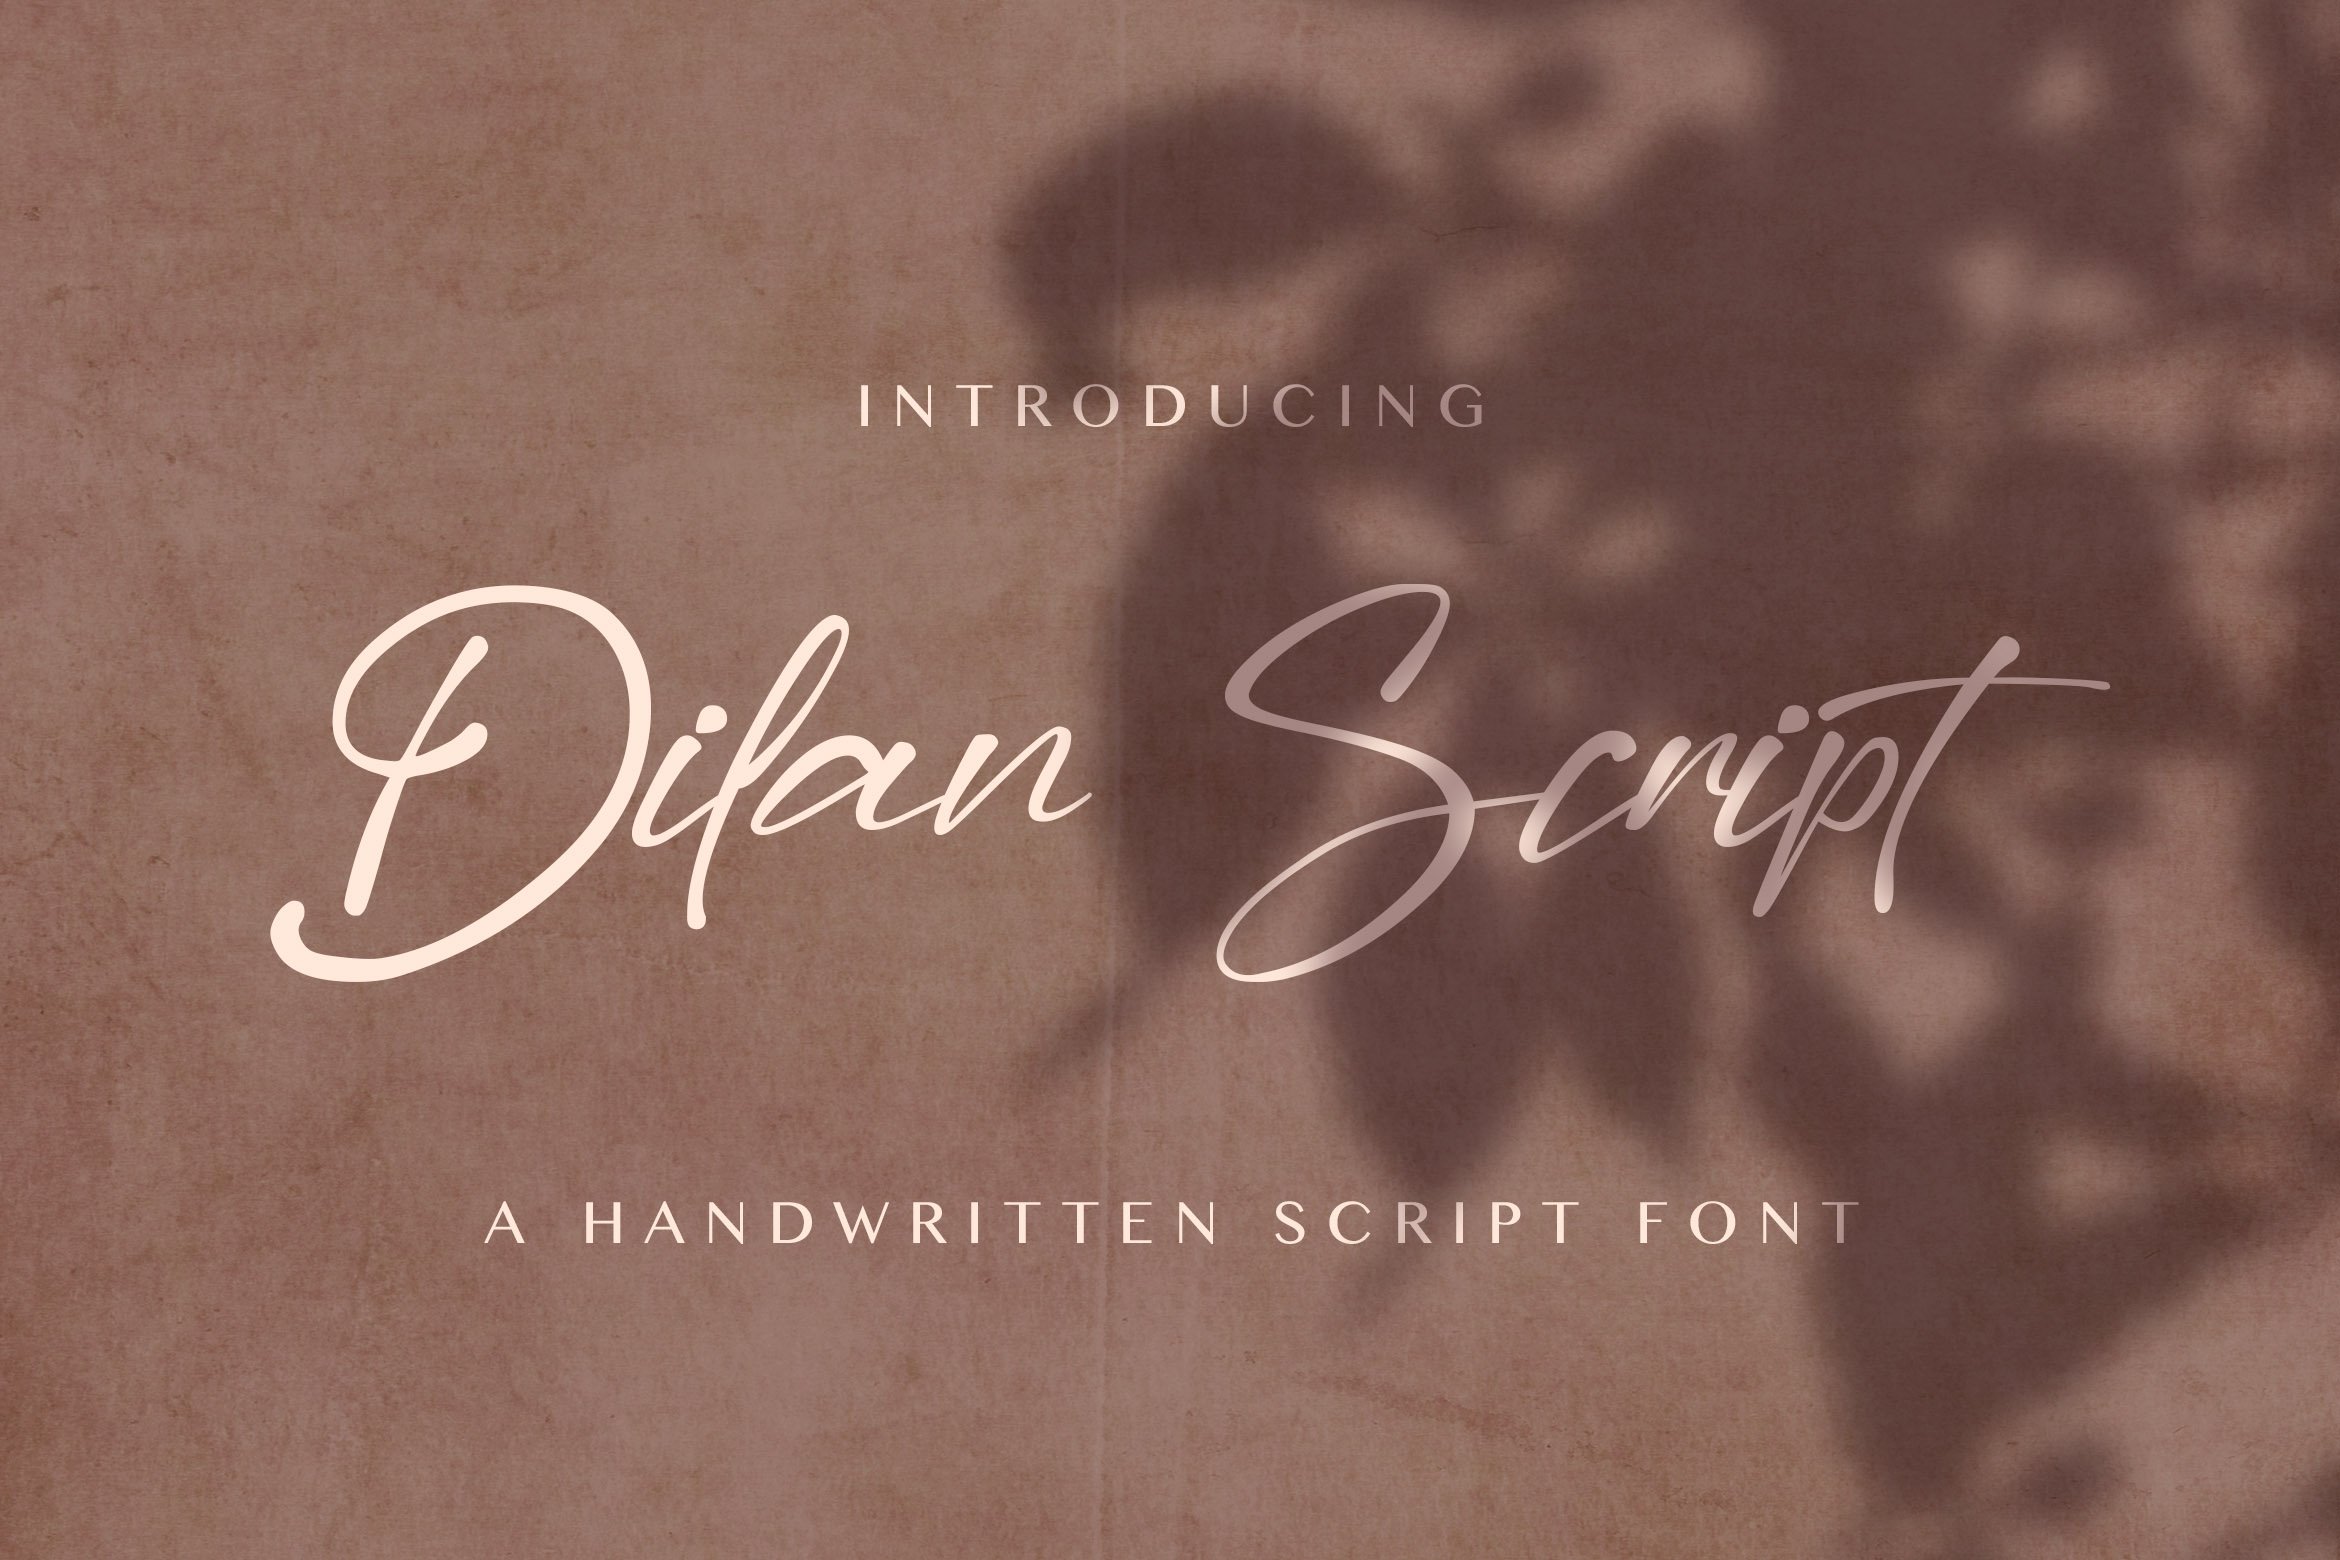 Dilan Script - Modern Script Font cover image.